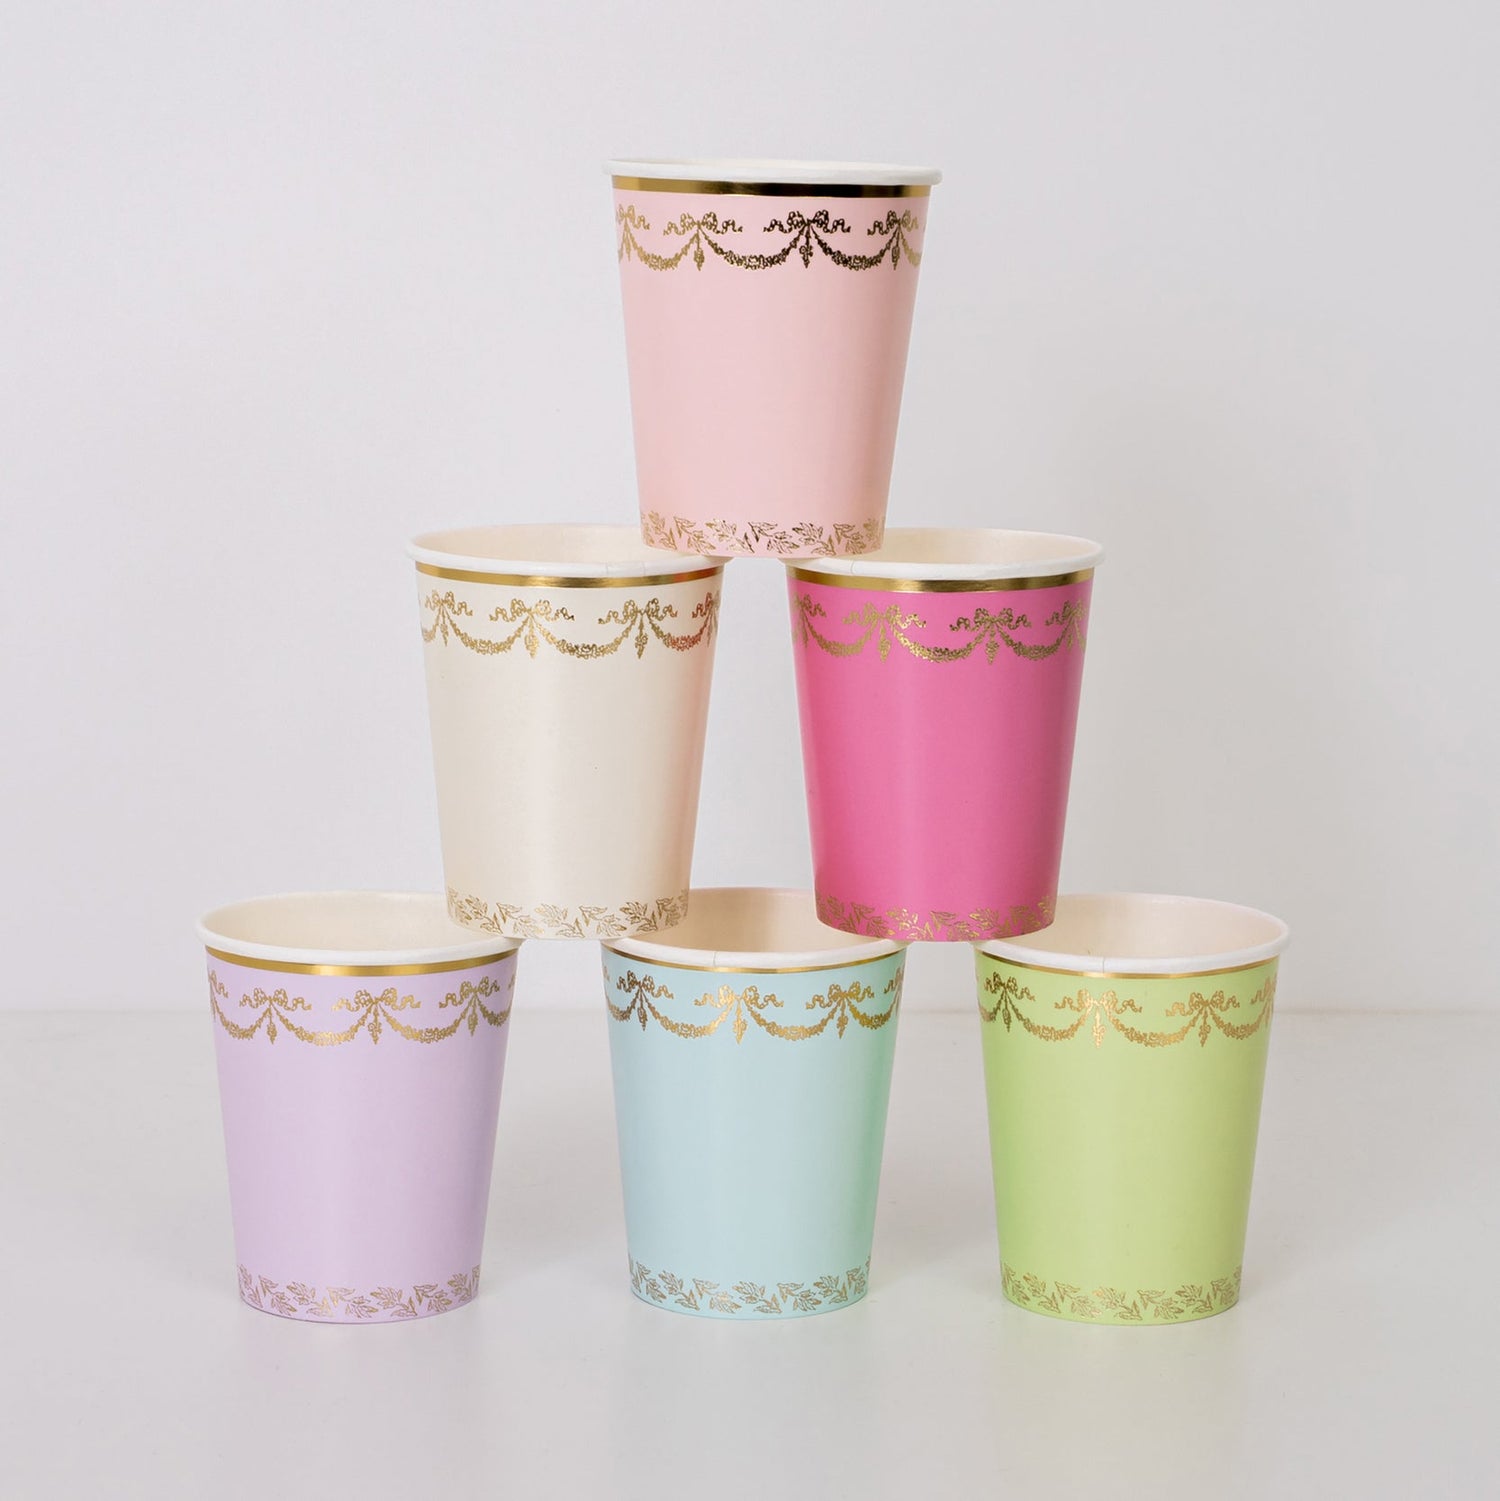 A stack of colorful Meri Meri Ladurée Paris Cups with gold trim.